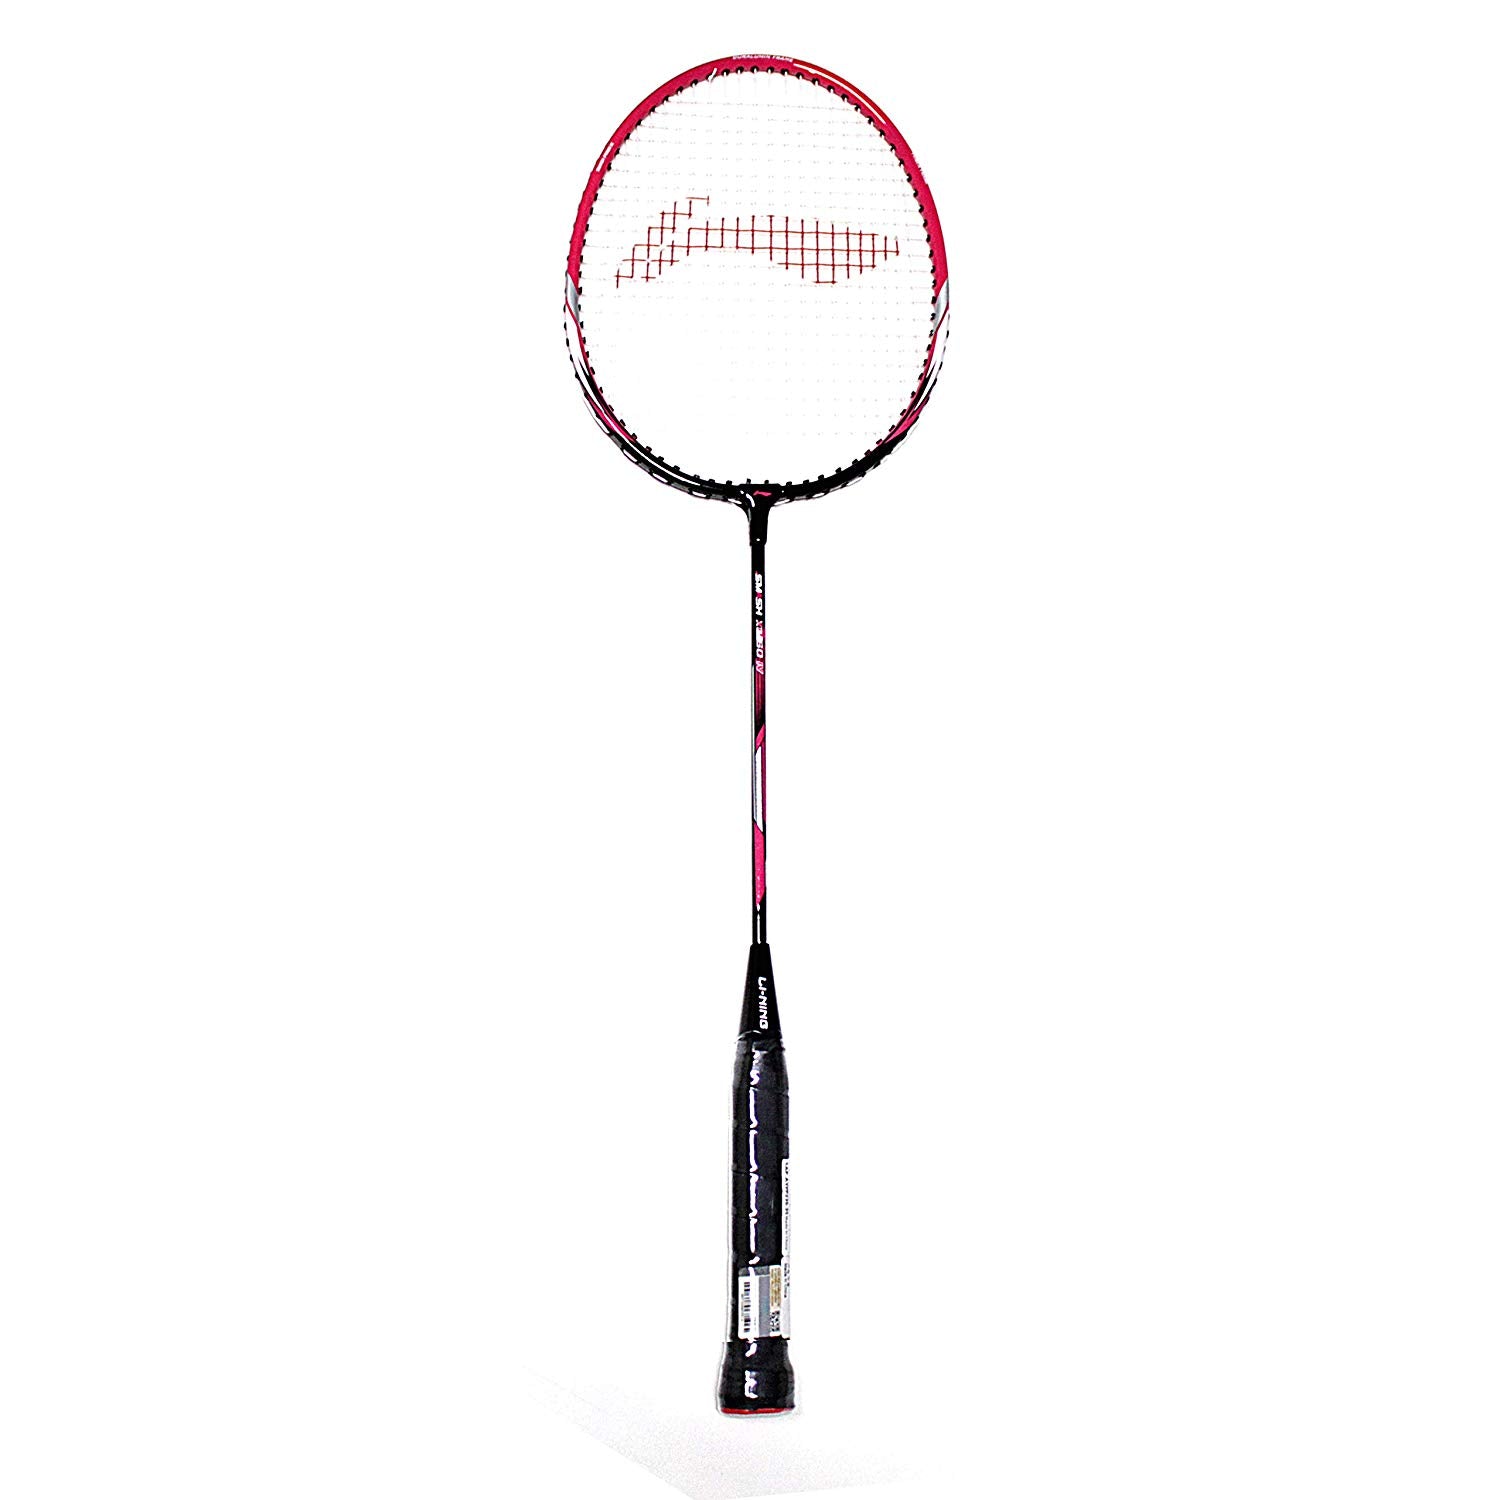 Li-Ning XP-60-IV Aluminum Badminton Racquet, Set of 2 (Black/Pink) - Best Price online Prokicksports.com